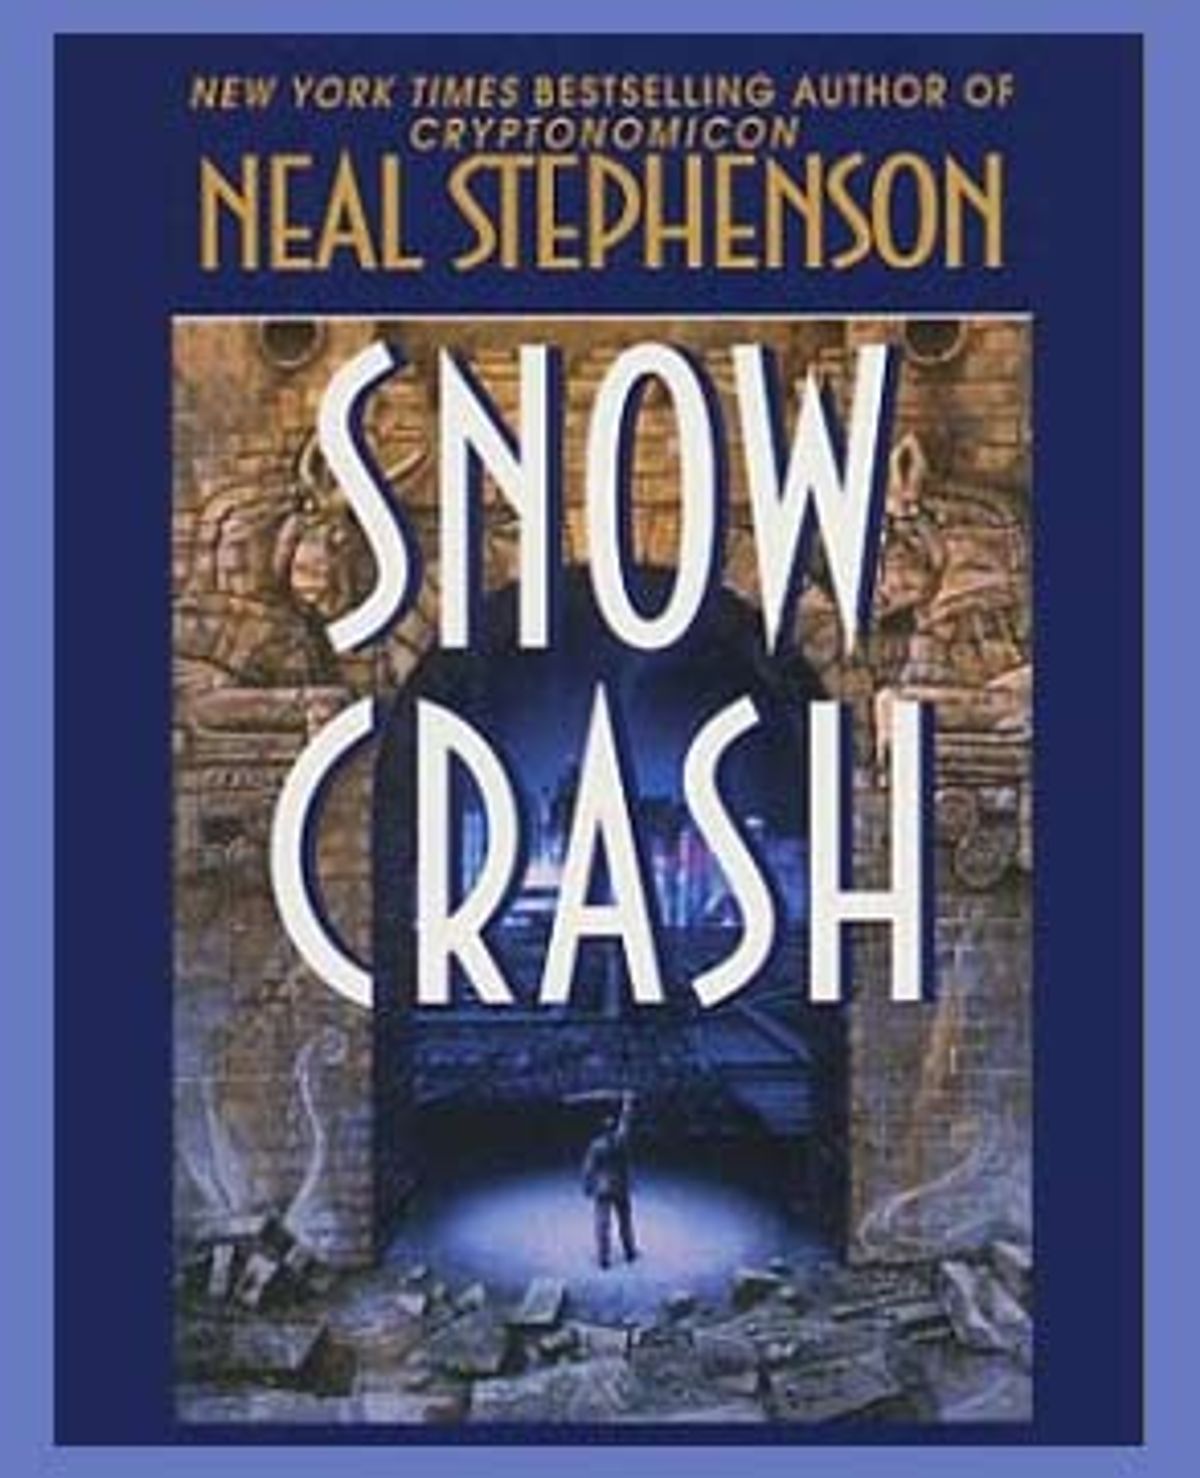 neal stephenson snow crash metaverse